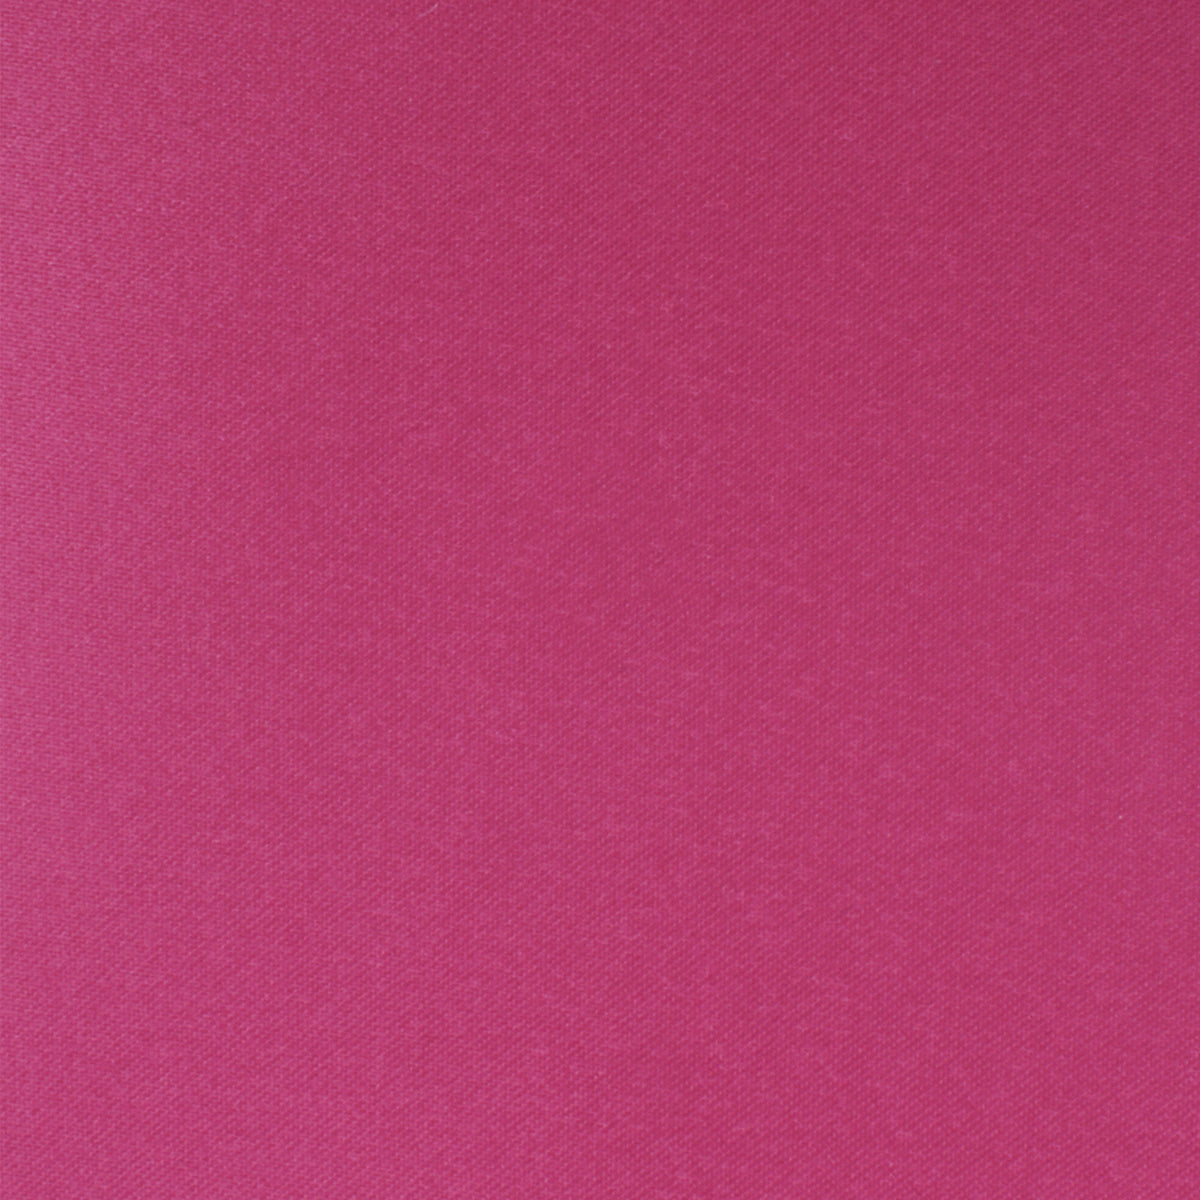 Magenta Pink Satin Self Bow Tie Fabric